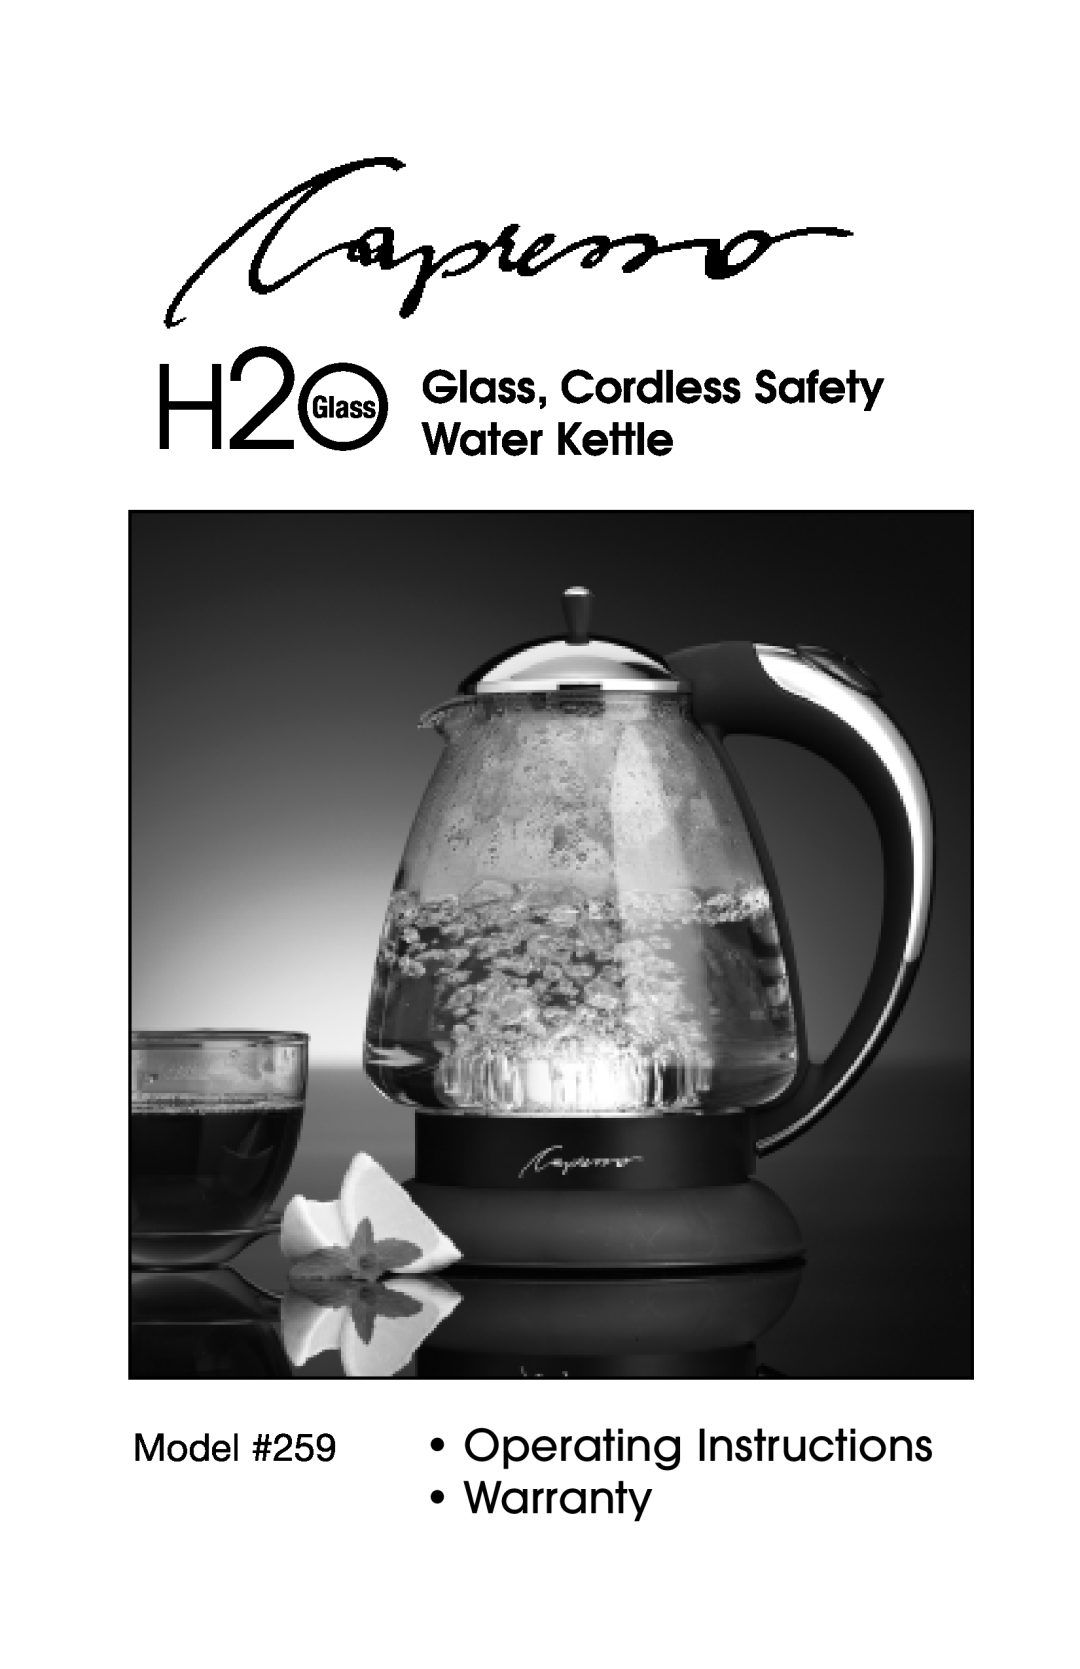 Capresso warranty H2O Glass, Cordless Safety, Water Kettle, Operating Instructions Warranty, Model #259 